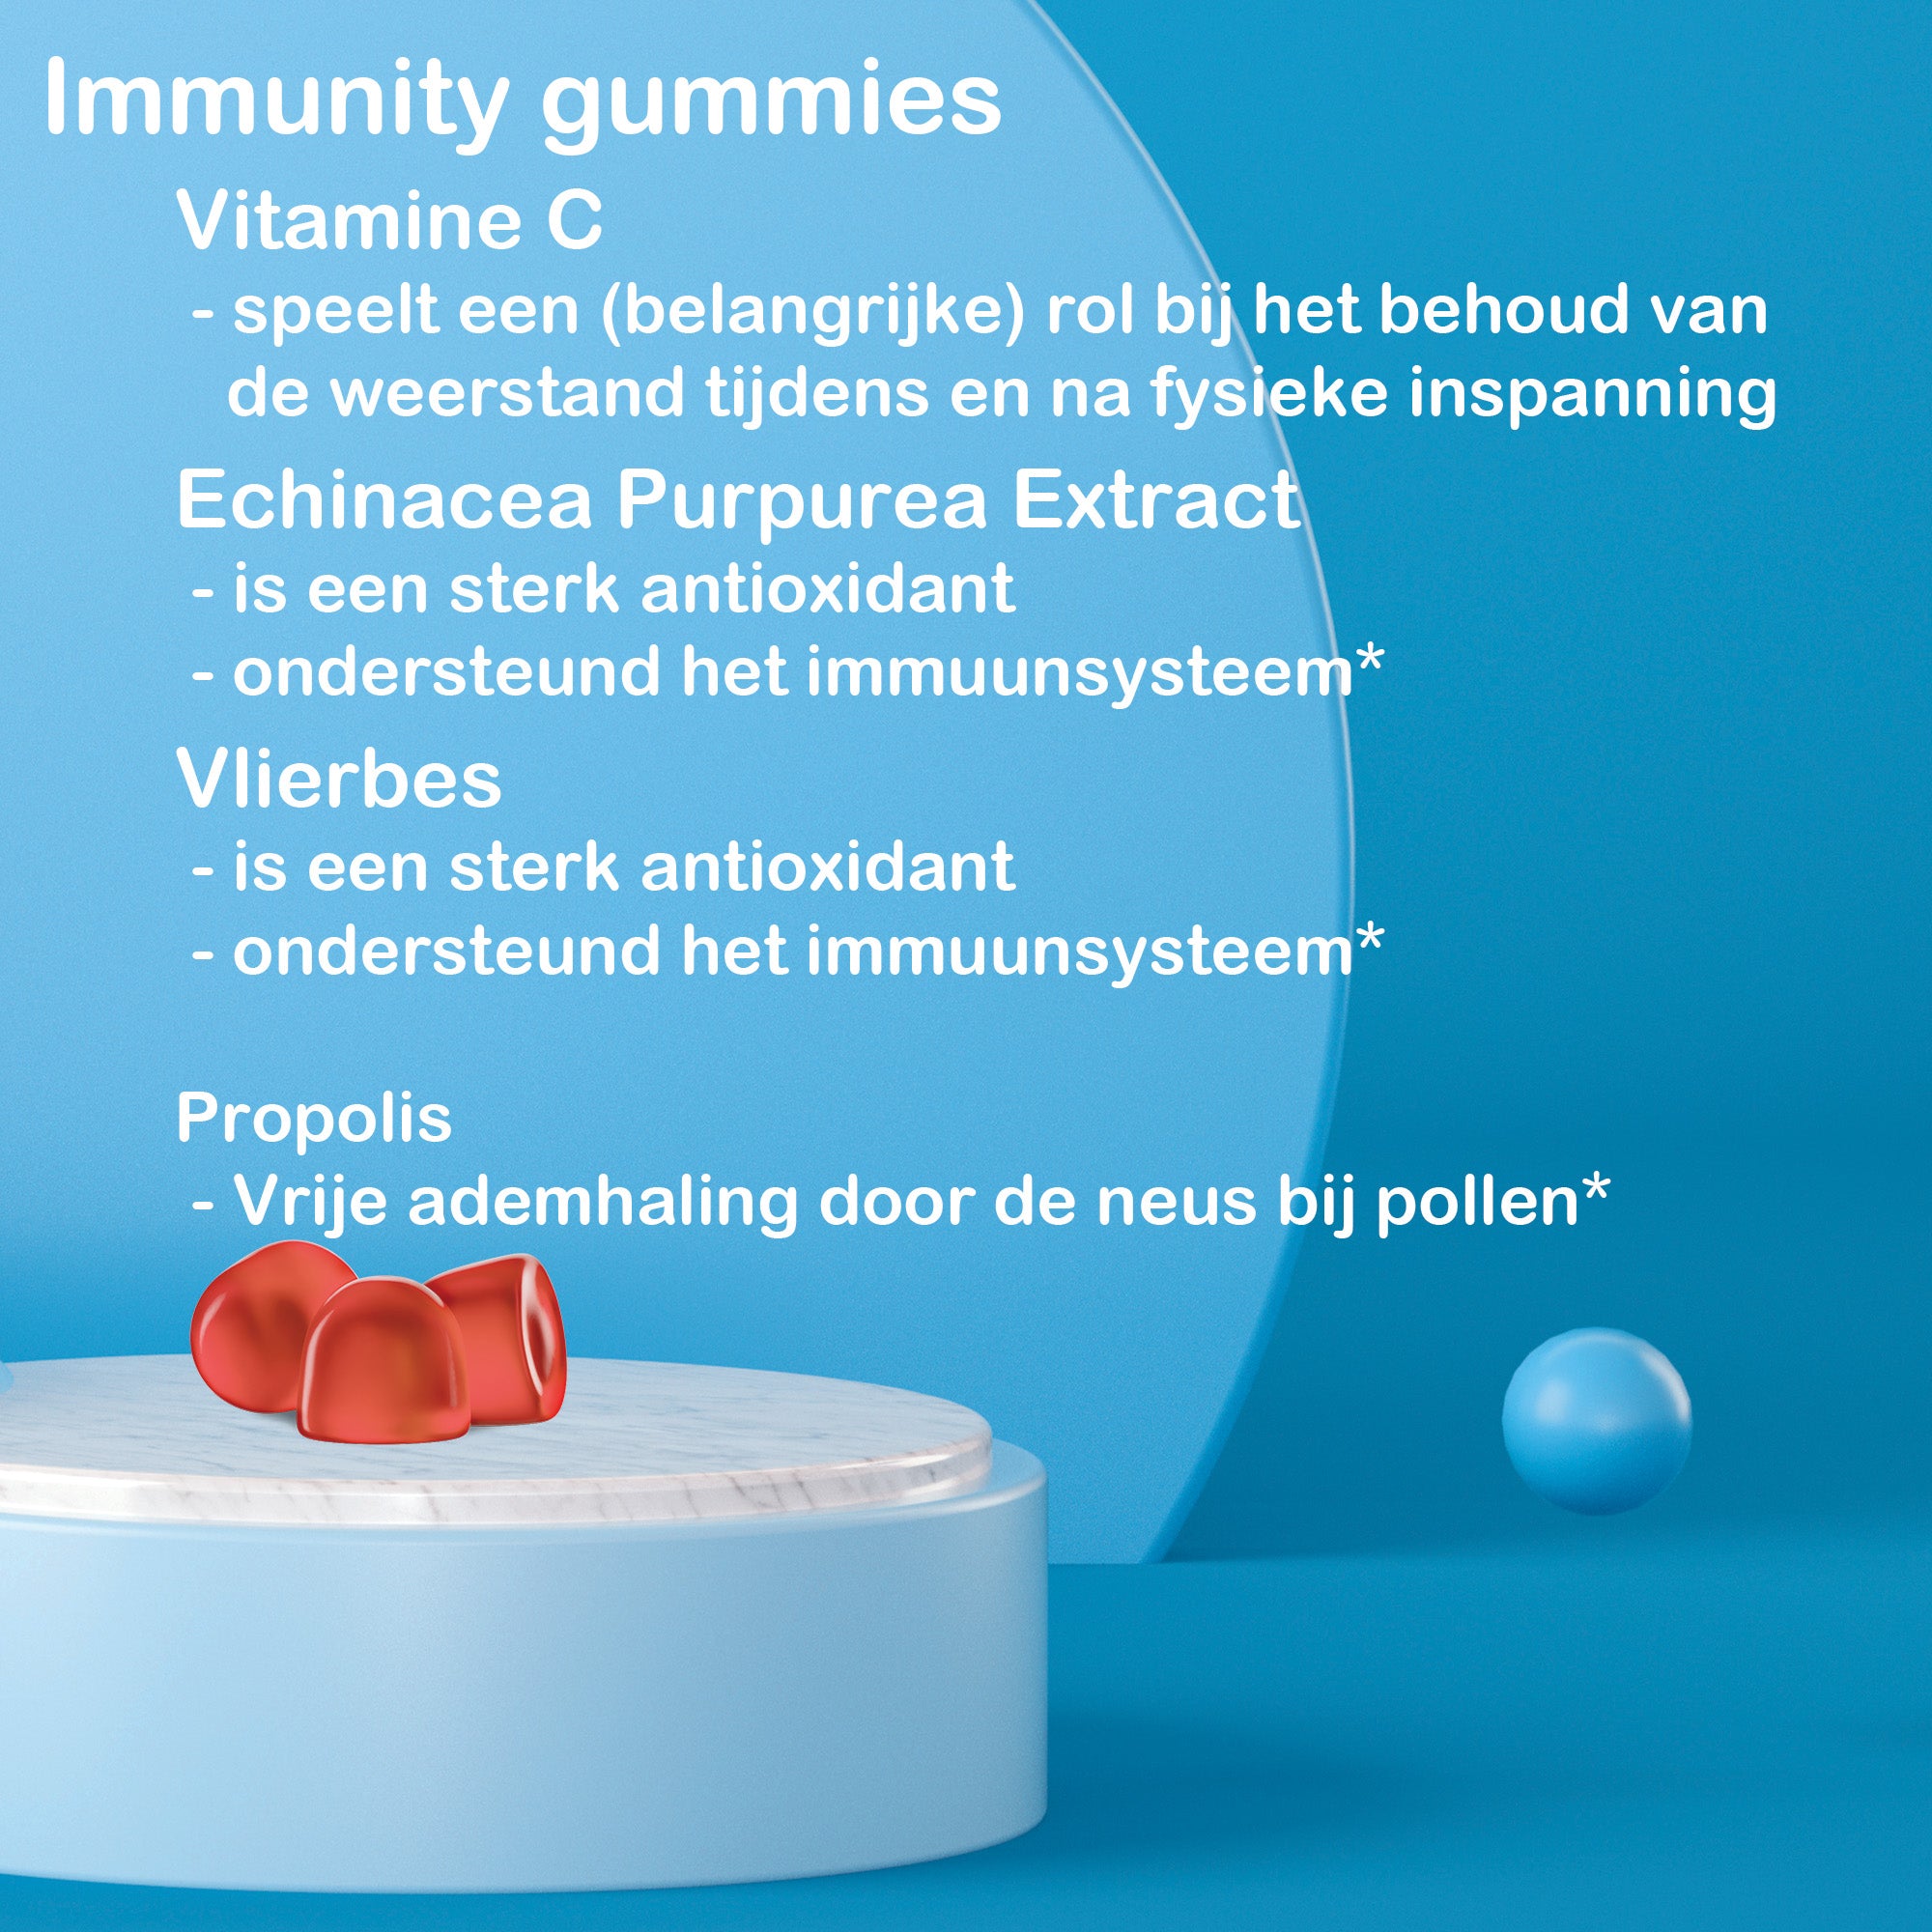 Luto Supplements Immunity Gummies | Vitamine C, Echinacea, Vlierbes, Propolis | Vegan Weerstandsondersteuning | 90 Gummies